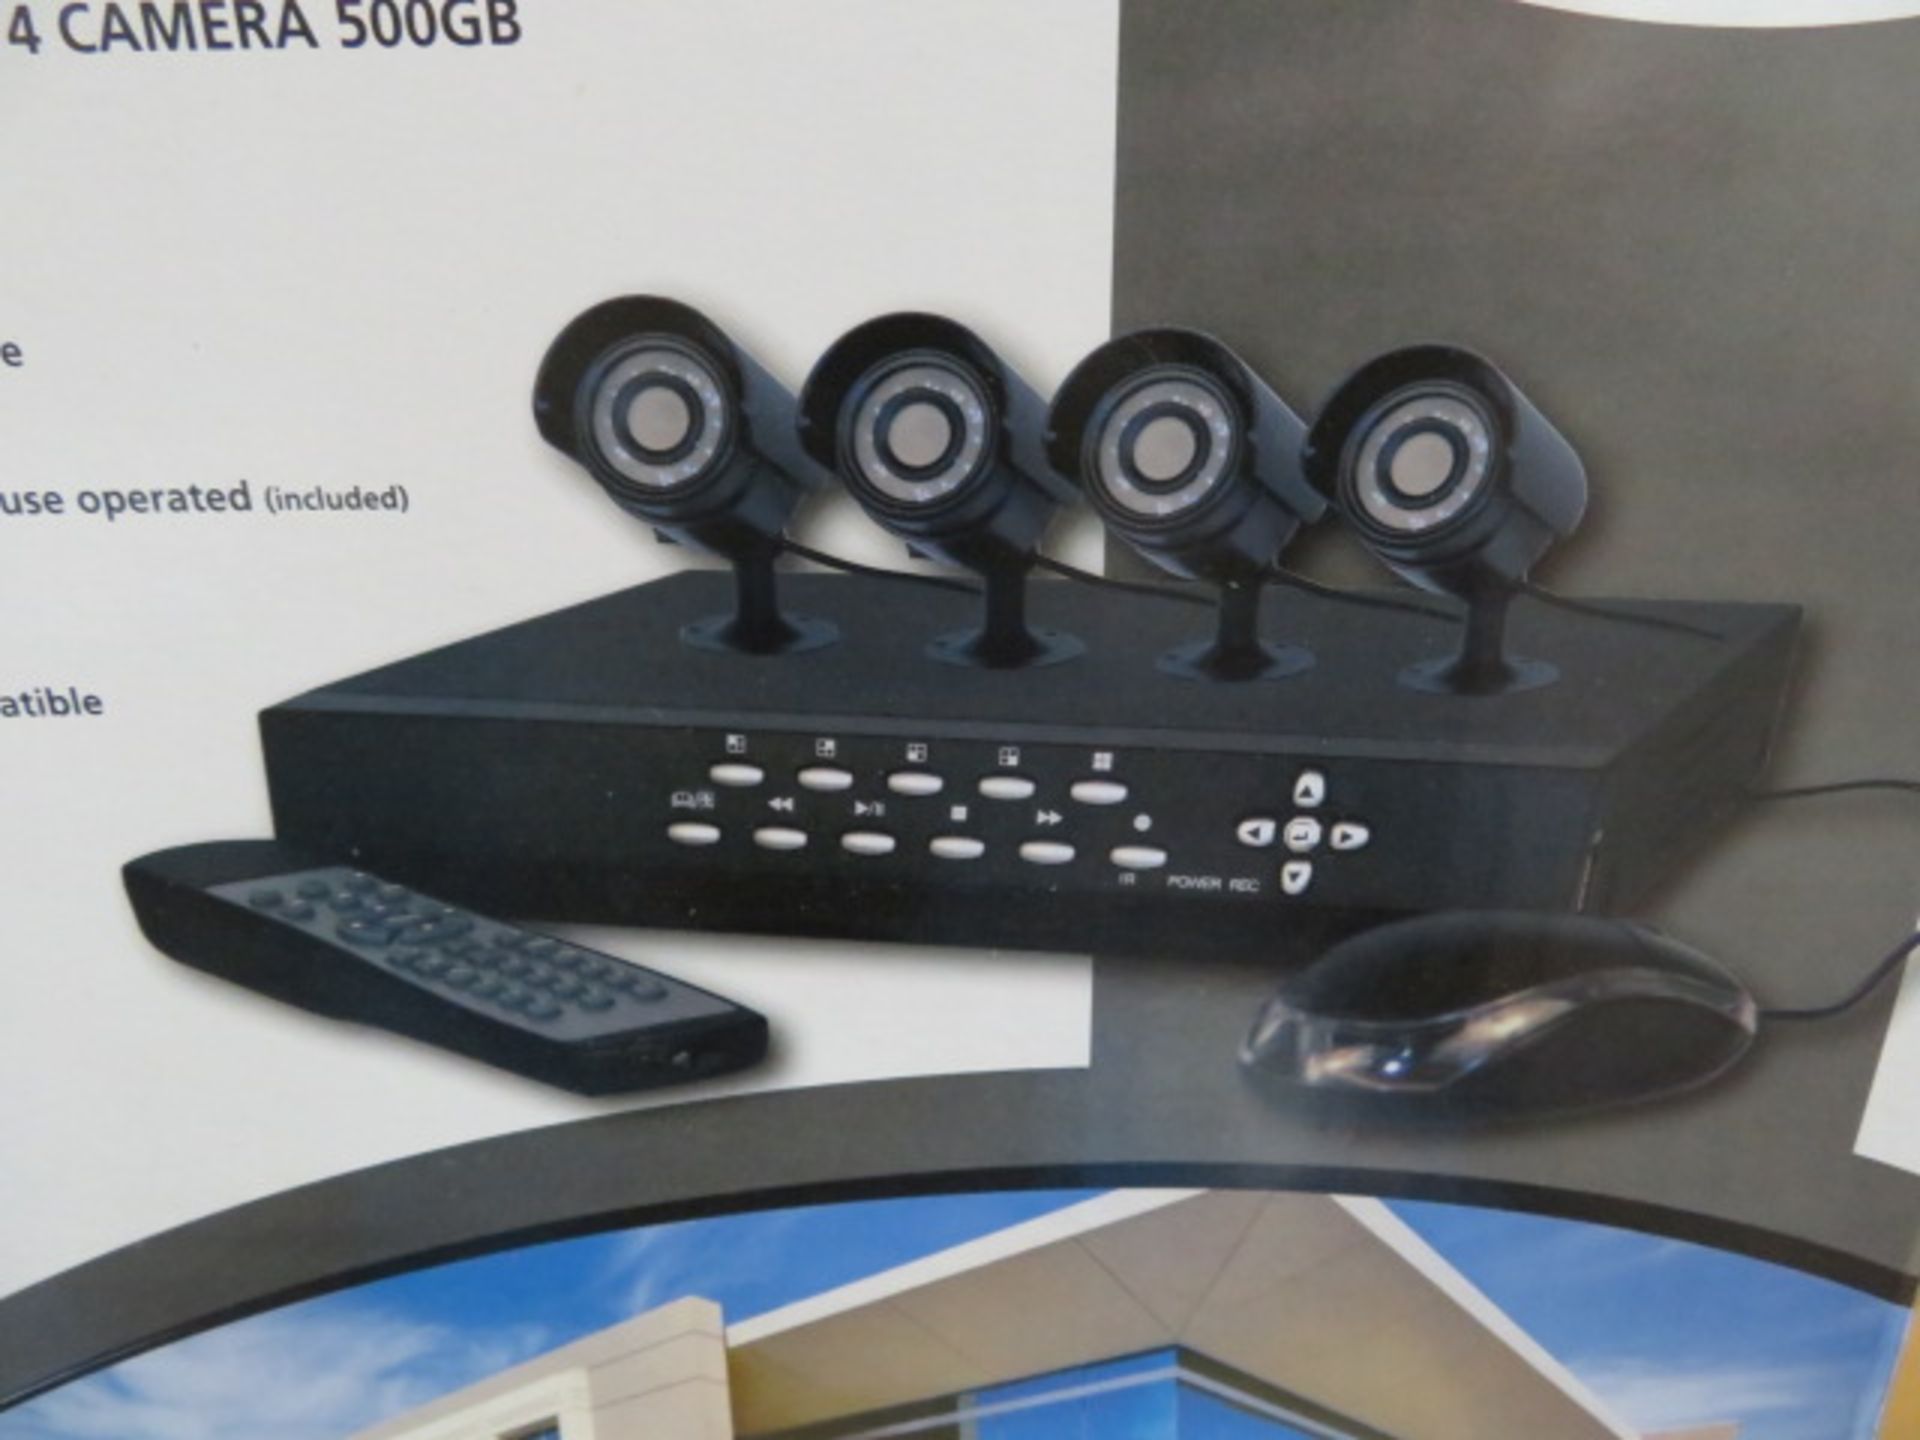 New & Boxed Byron Dvr500Set. Professional Cctv System. 4 Camera 500Gb. 4 Colour Cameras, Bui... - Image 2 of 4